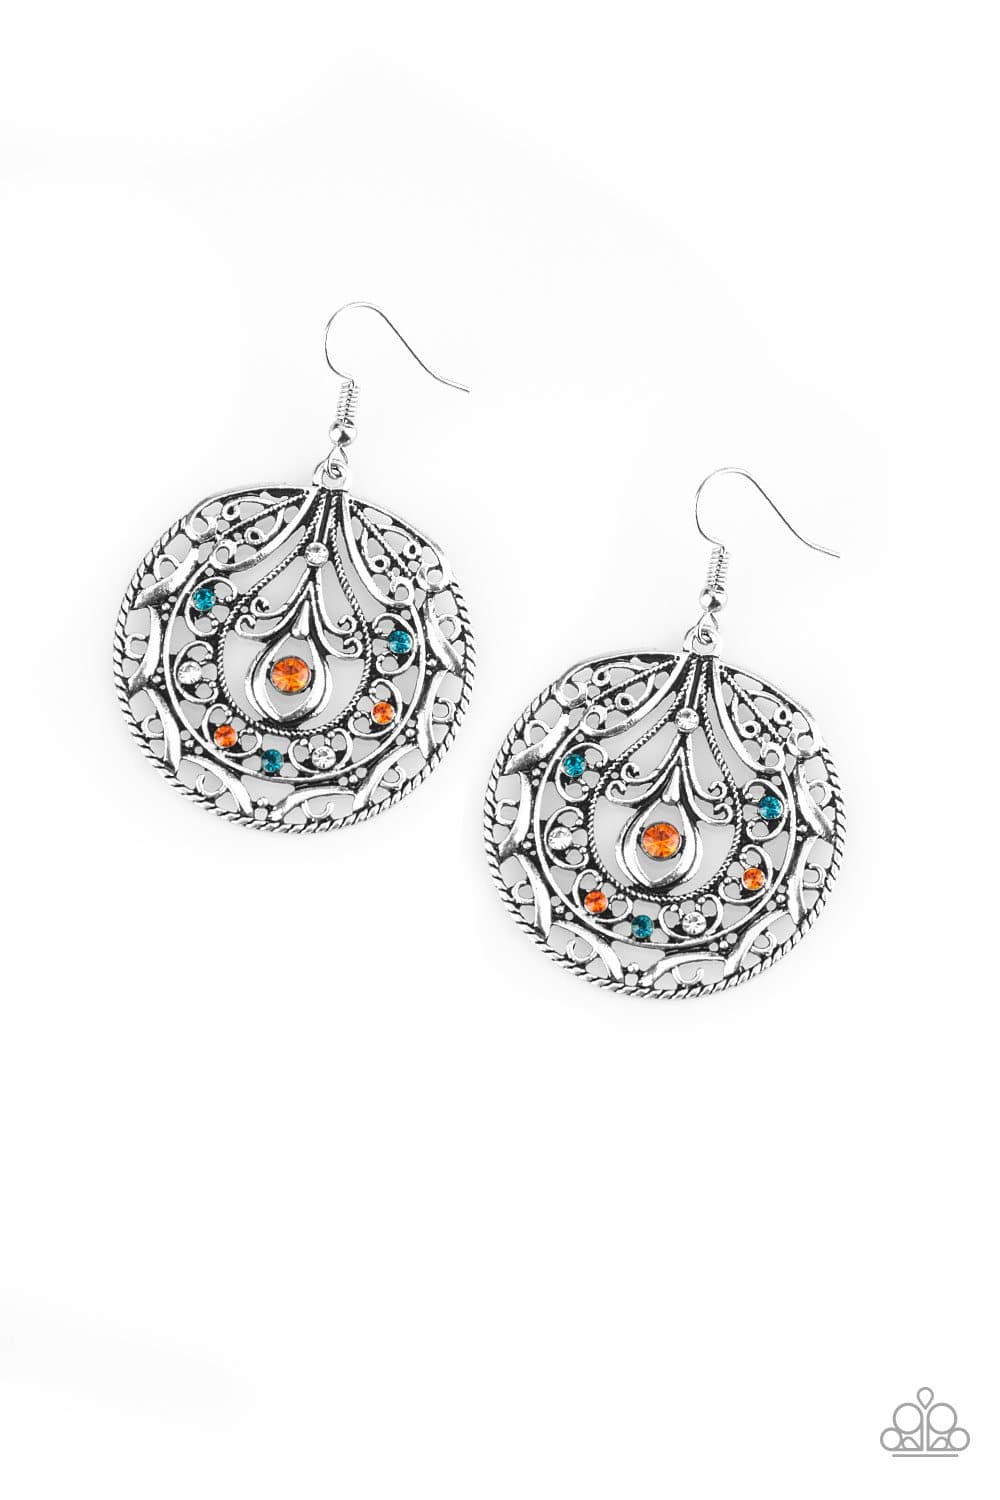 Choose To Sparkle - Blue and Orange Rhinestone Earrings - Paparazzi Accessories - GlaMarous Titi Jewels